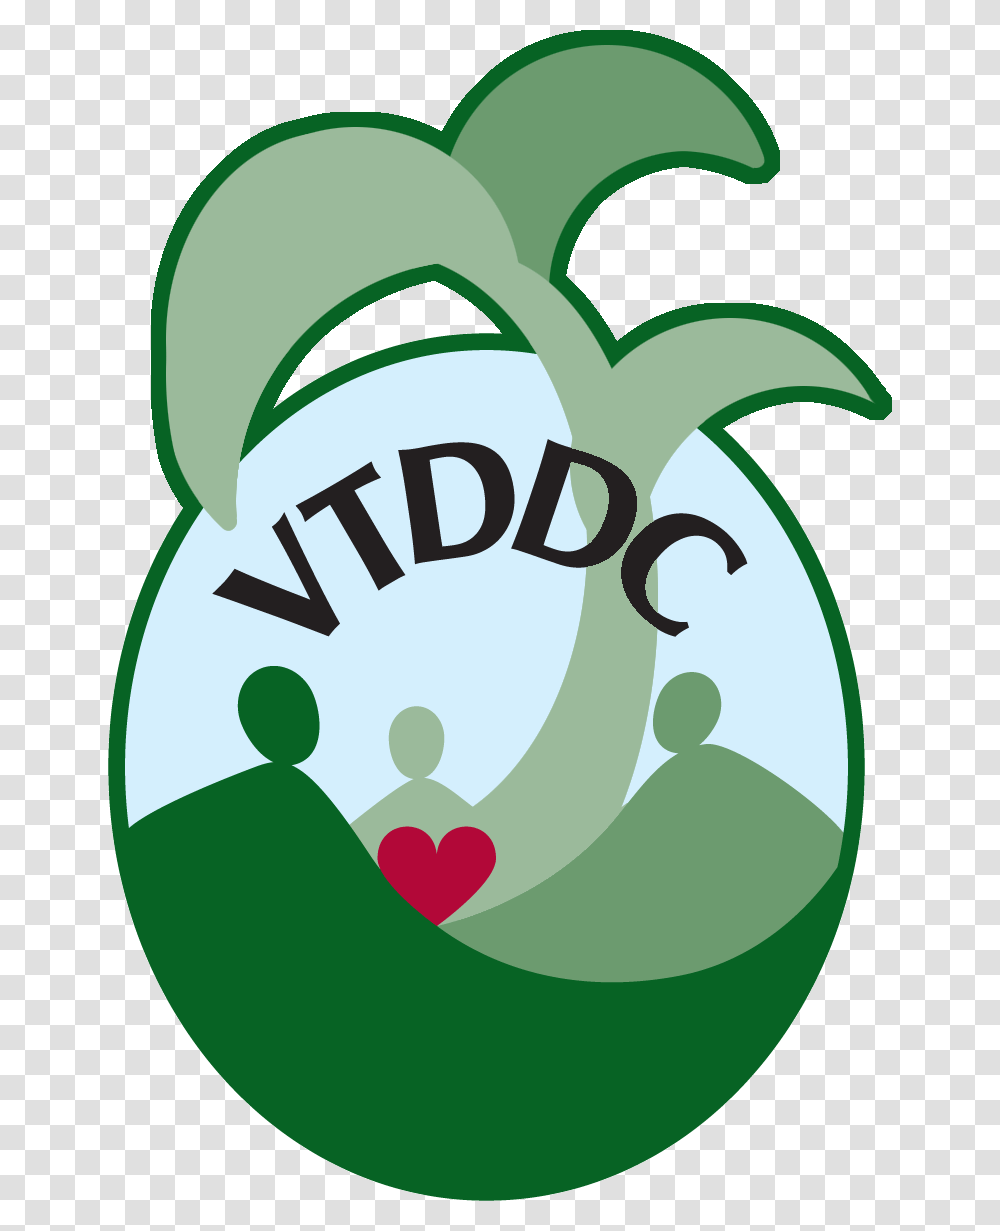 Vtddc Wo Seeds Developmental Disabilities Council, Logo Transparent Png